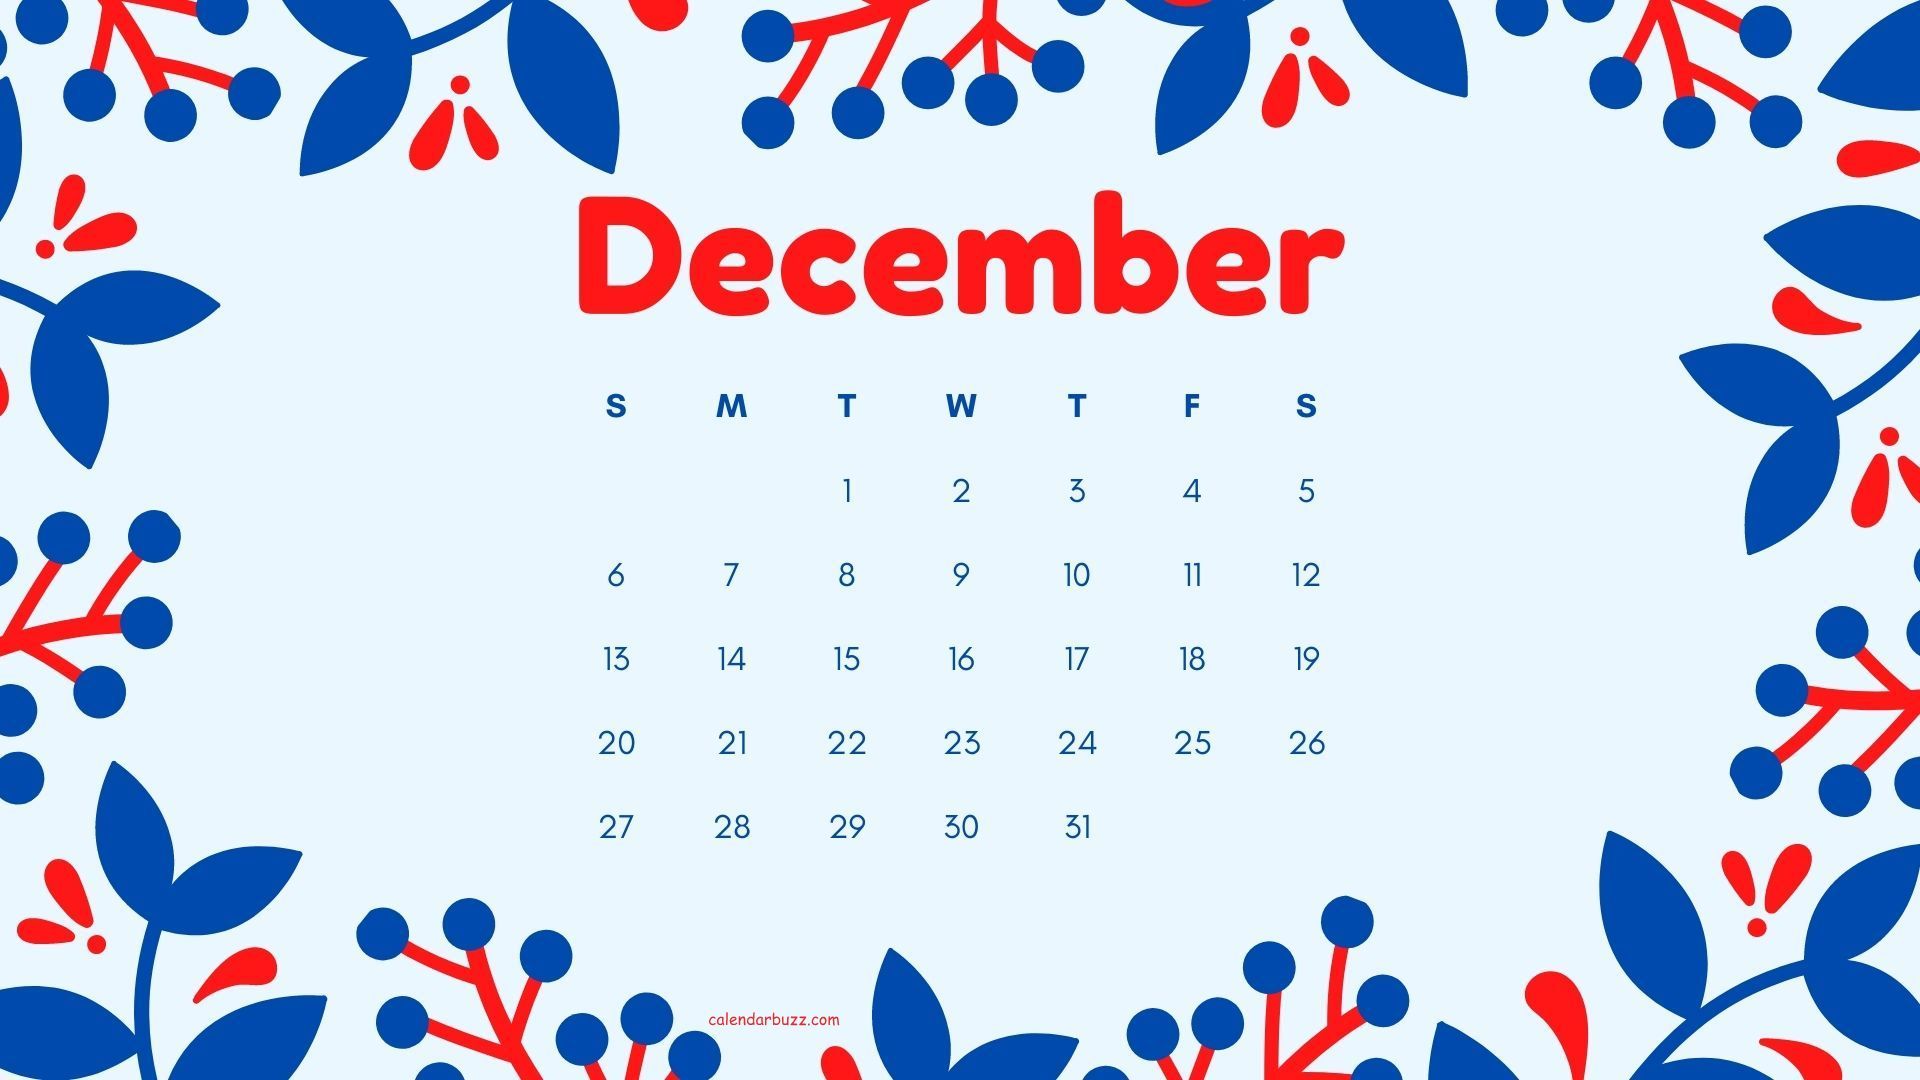 December 2020 Desktop HD Calendar Wallpaper Free Download